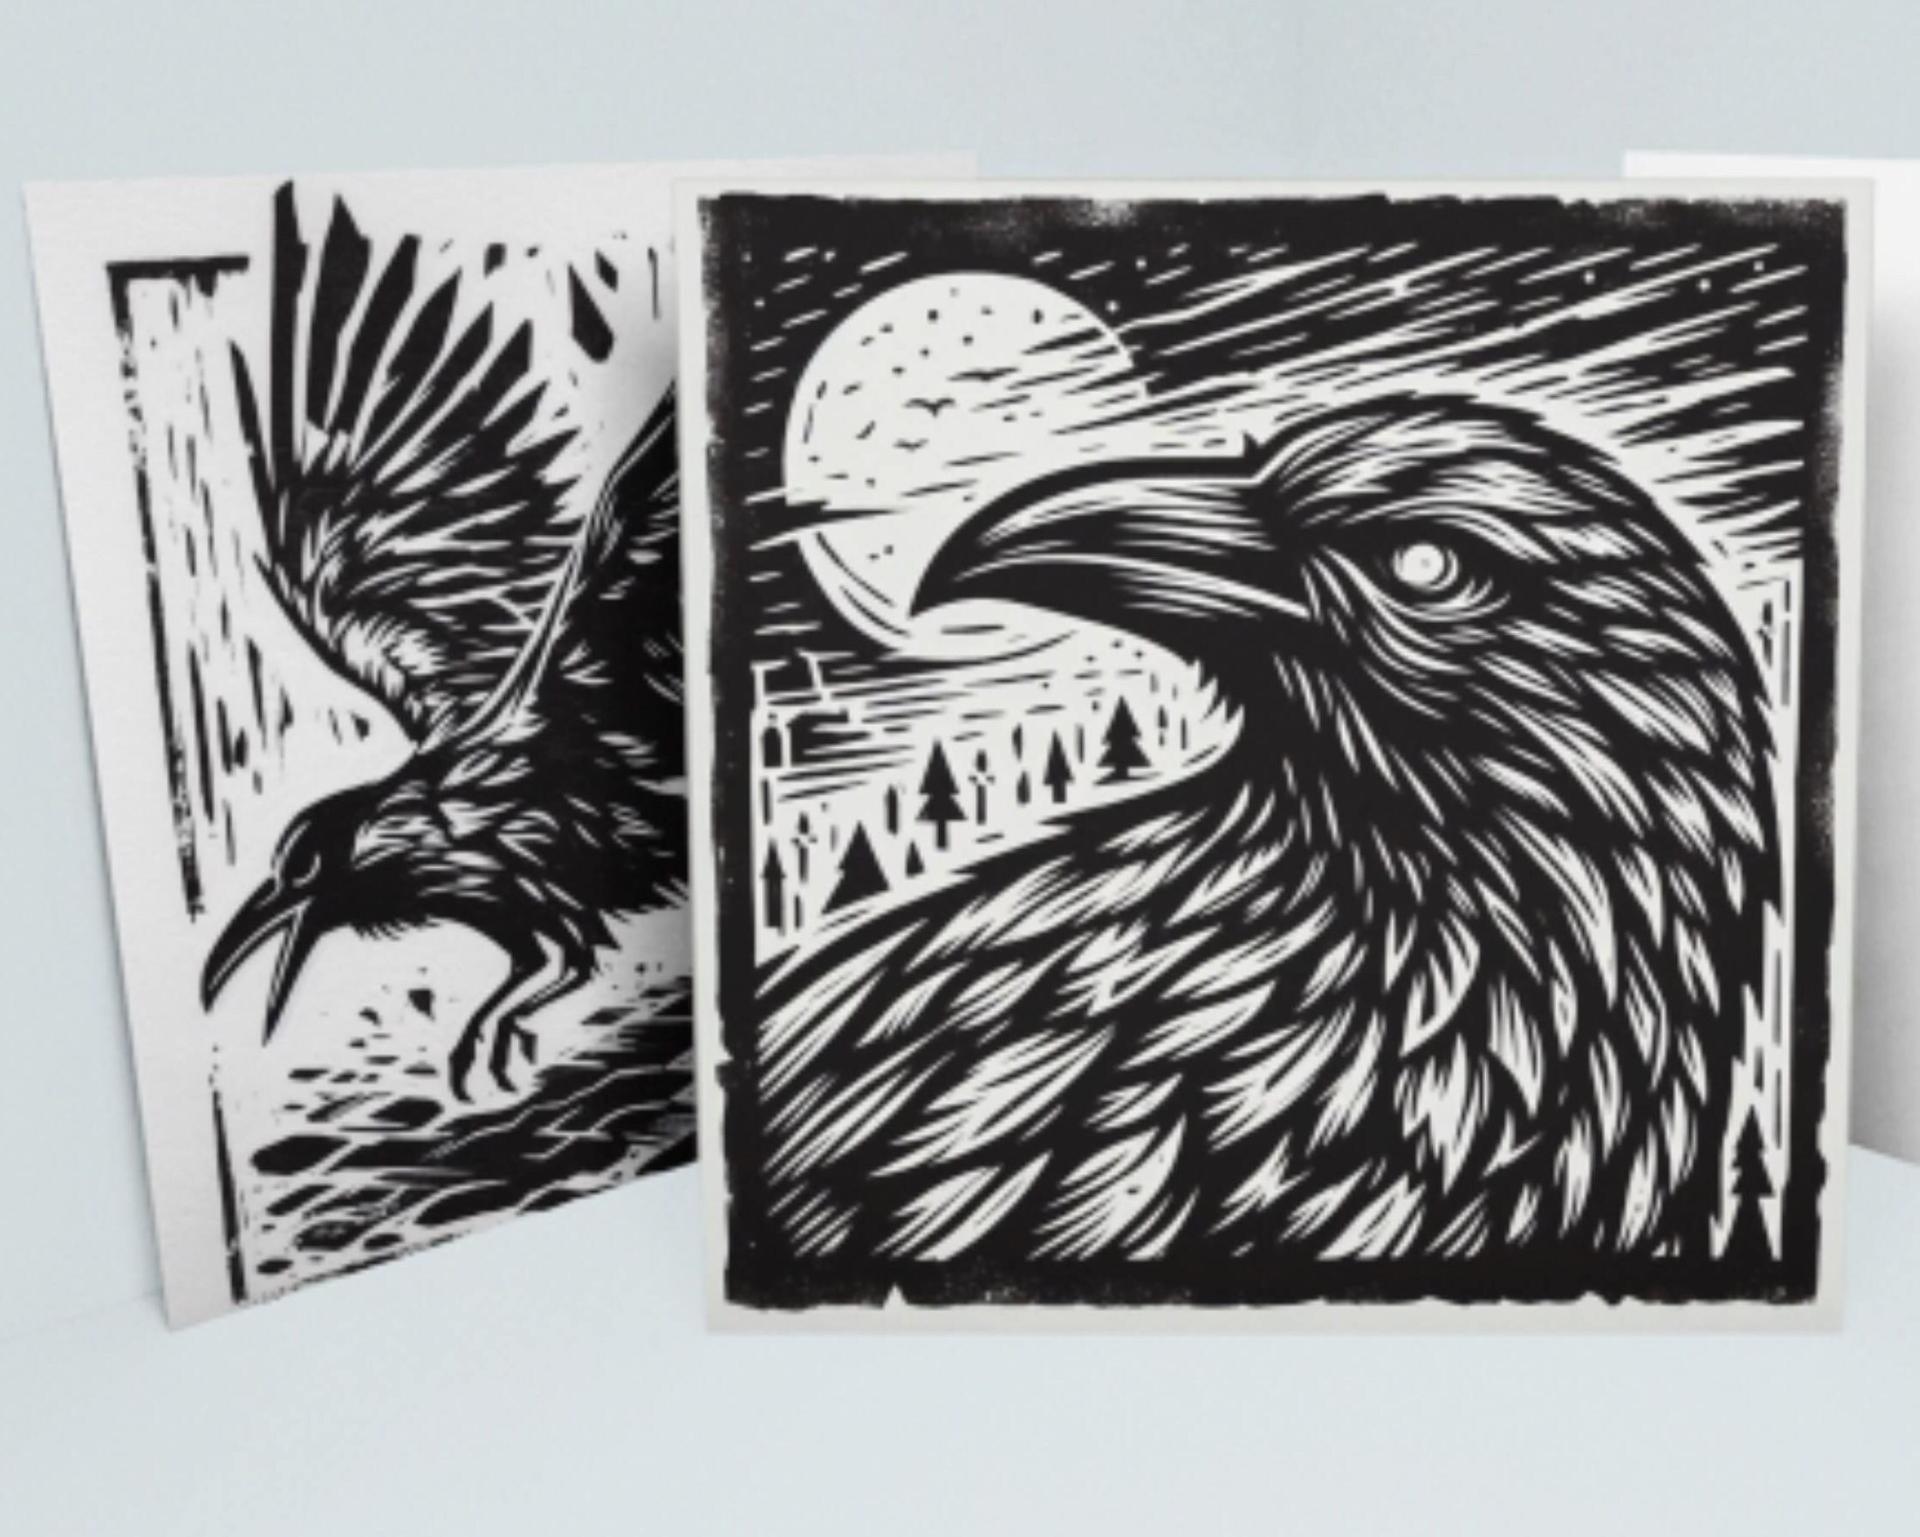 Set of 5 Cards - Ravens - Greeting Cards, Bulk Pack of Cards